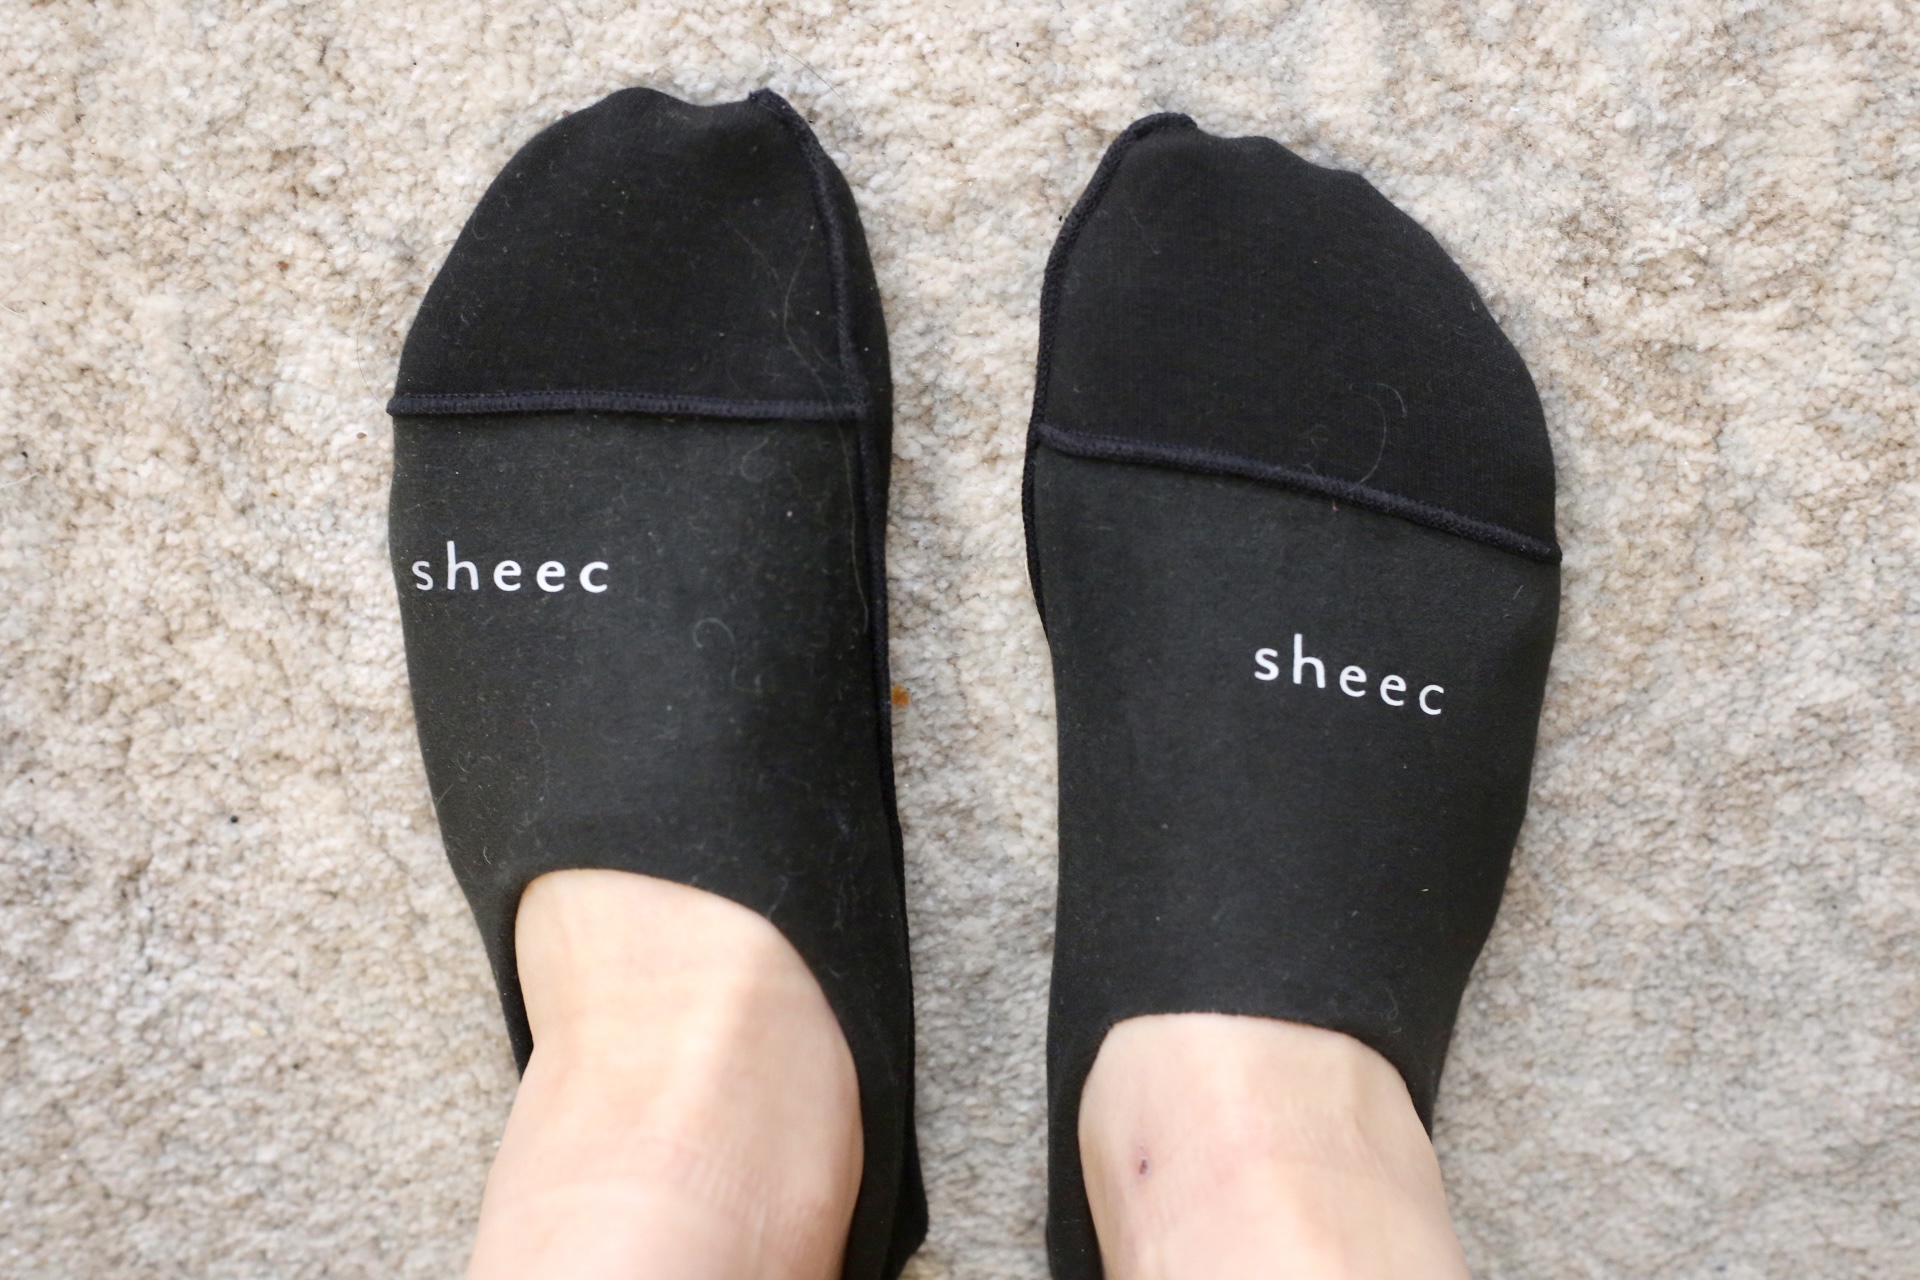 Sheec socks